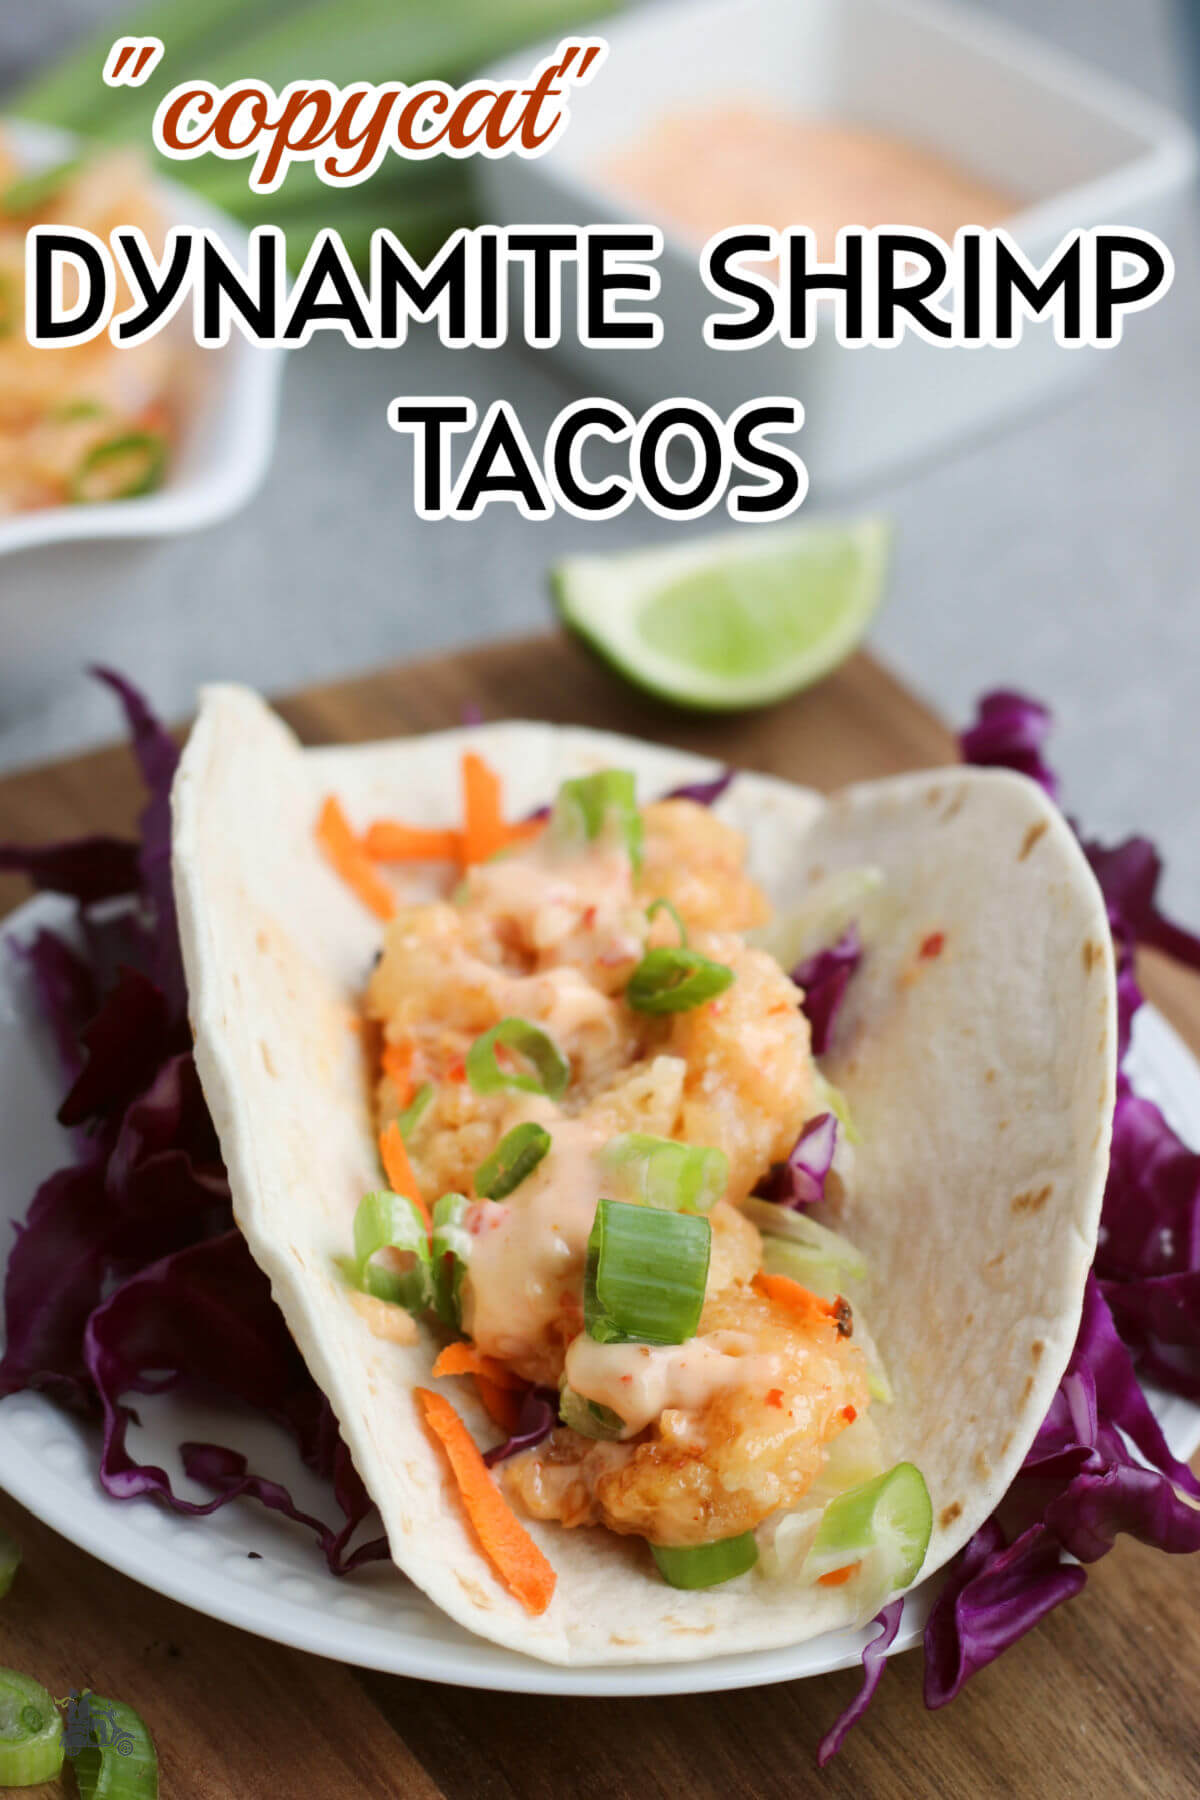 Bang Bang Dynamite Shrimp served as tacos with purple cabbage. 